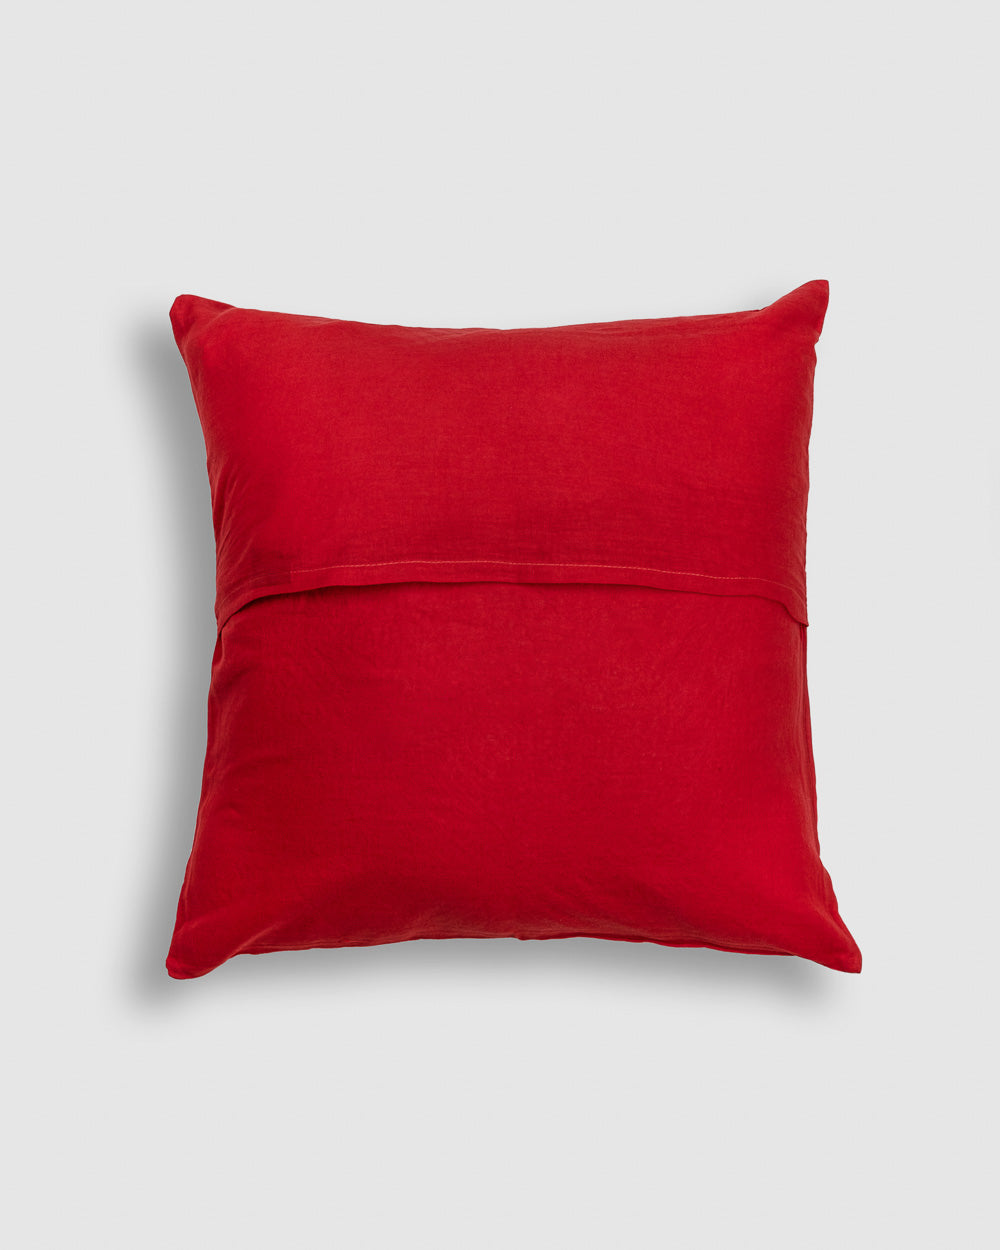 Cushion Cover Applique Kidd Design, Red